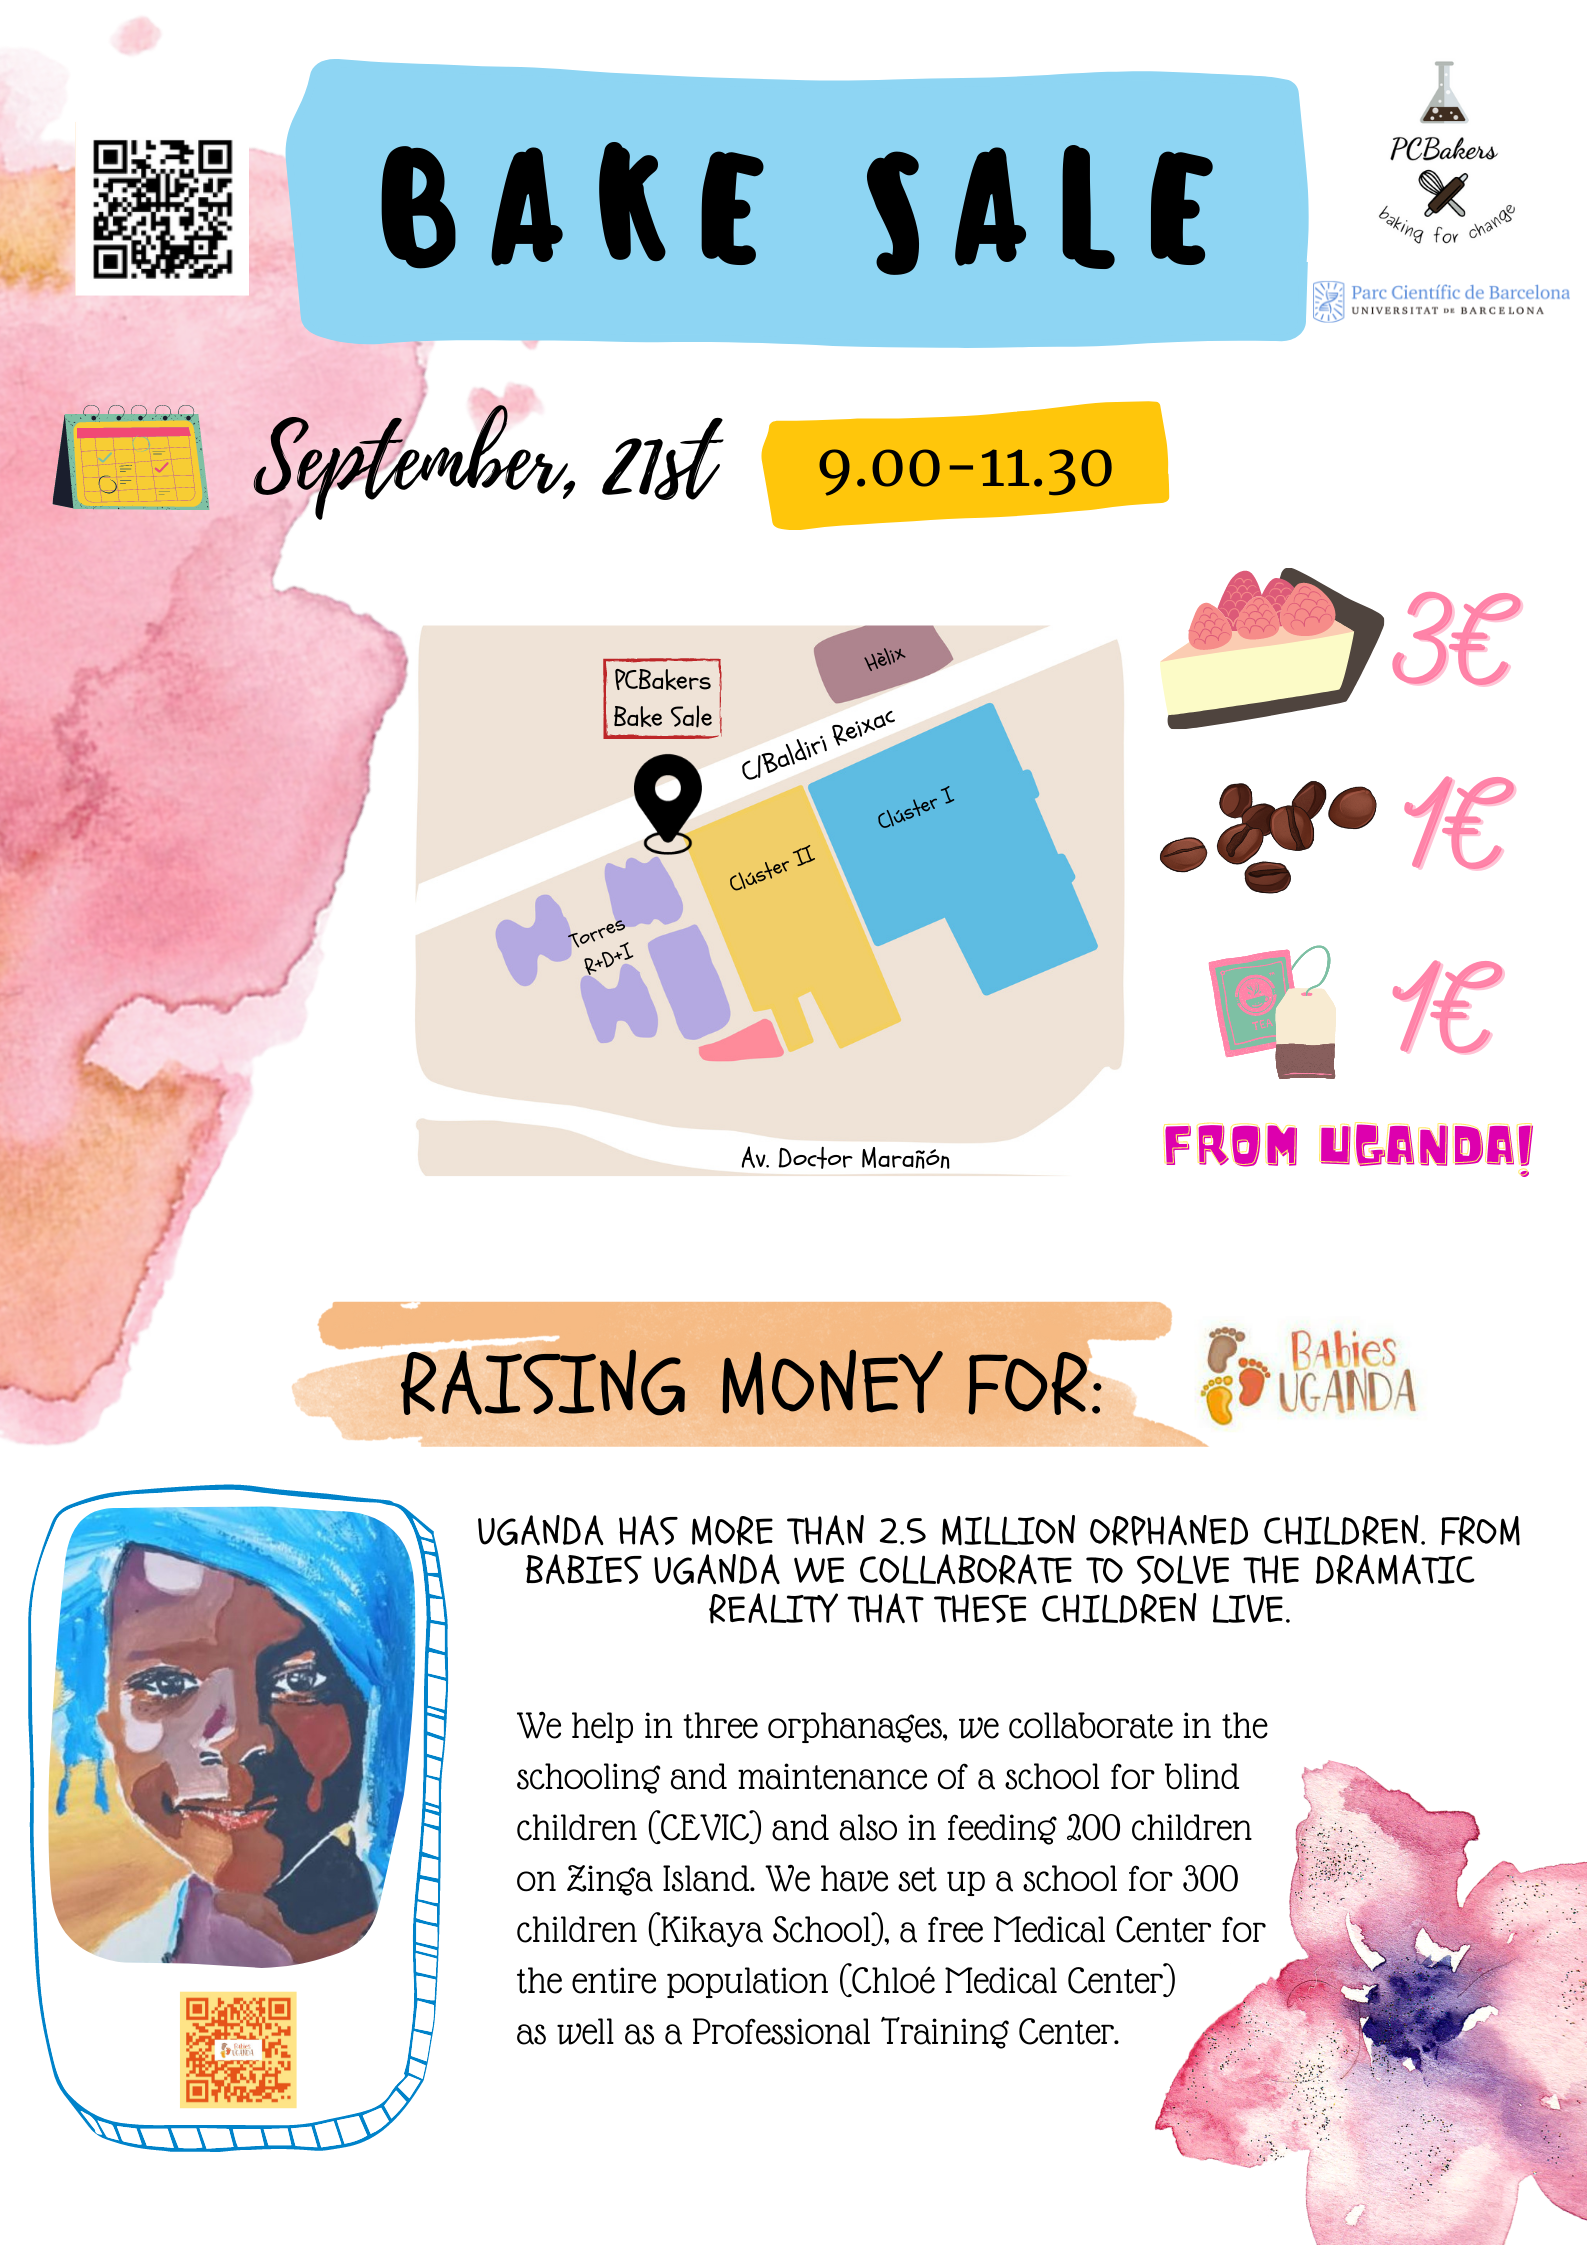 Bake Sale September 21st - Babies Uganda